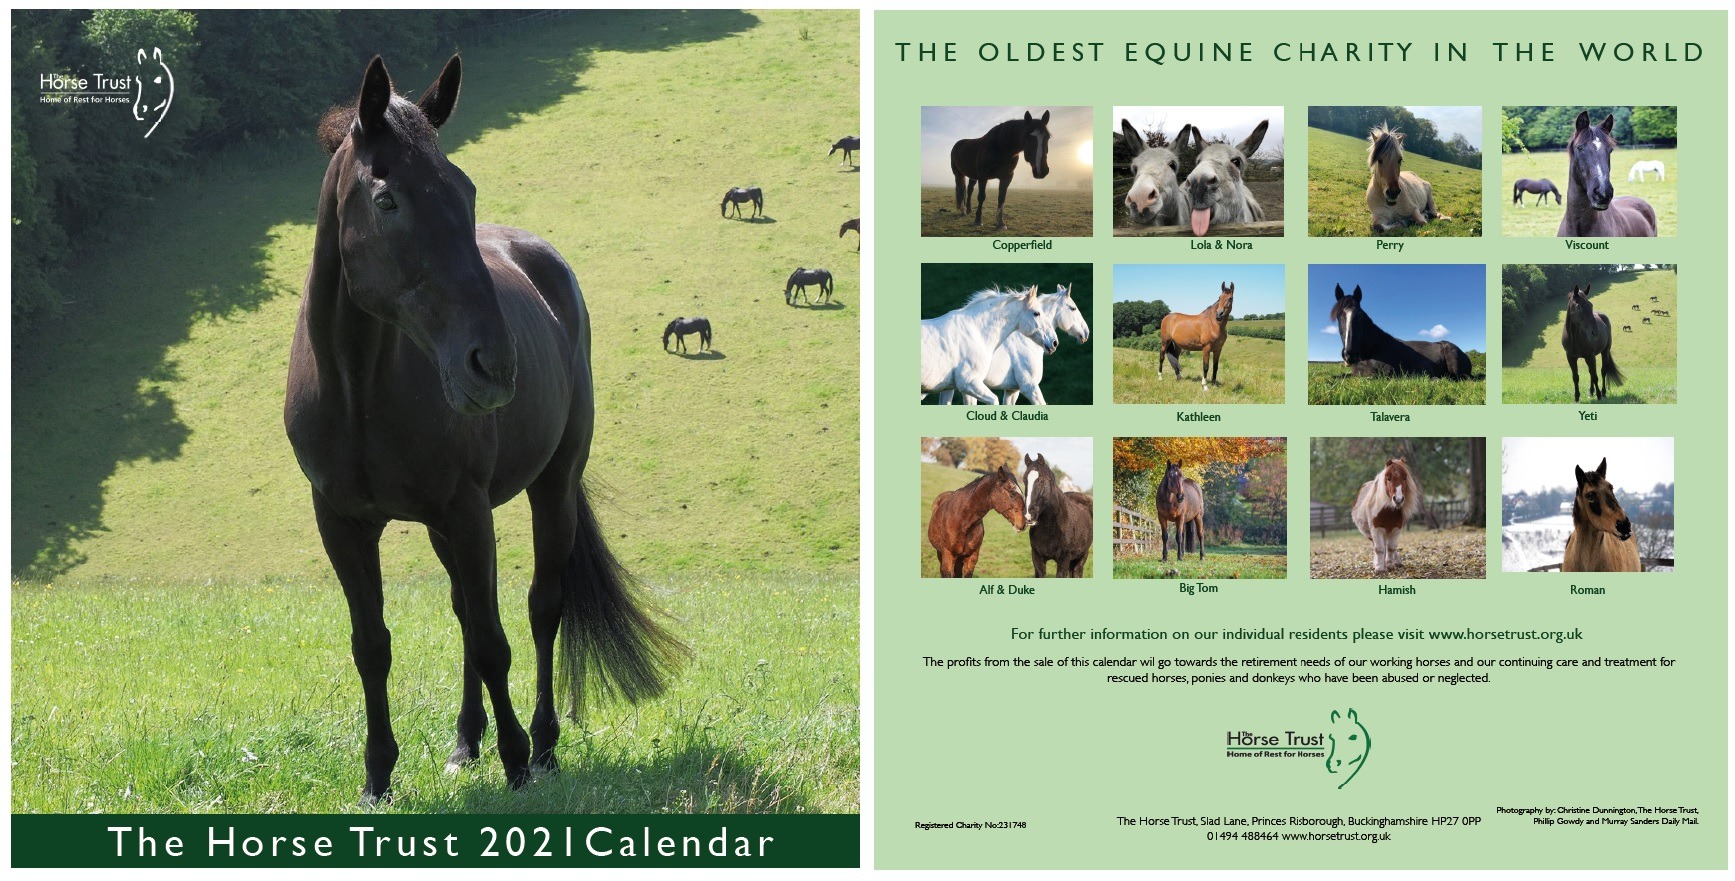 The Horse Trust 2021 Calendar